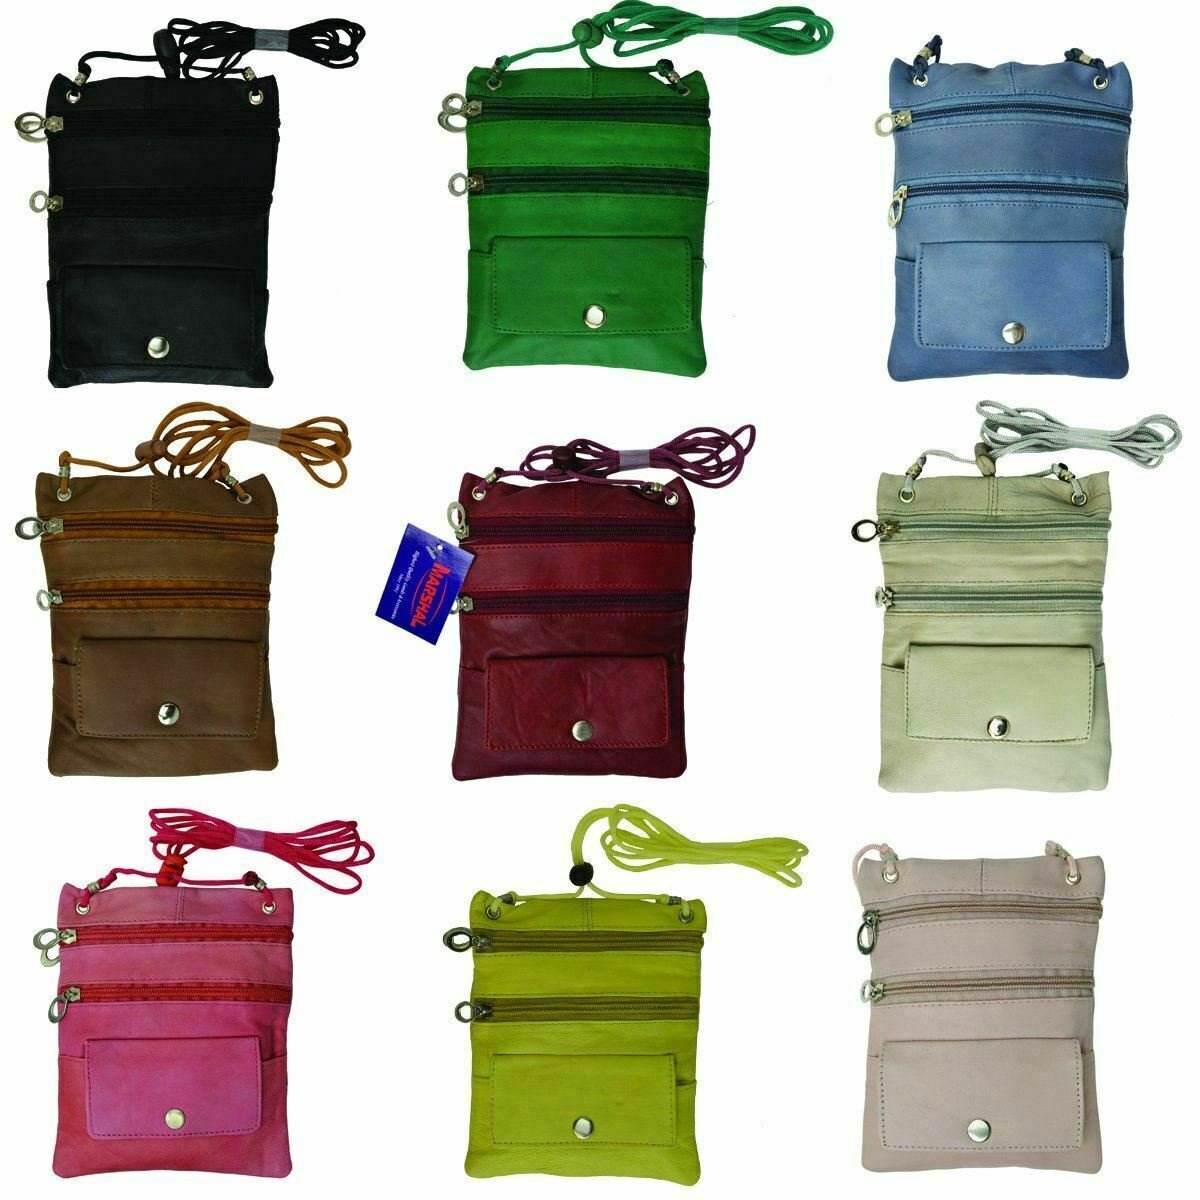 Marshal Wholesale Soft Leather Purse Organizer Shoulder Bag Travel Wallet Colors Assorted (12pcs)